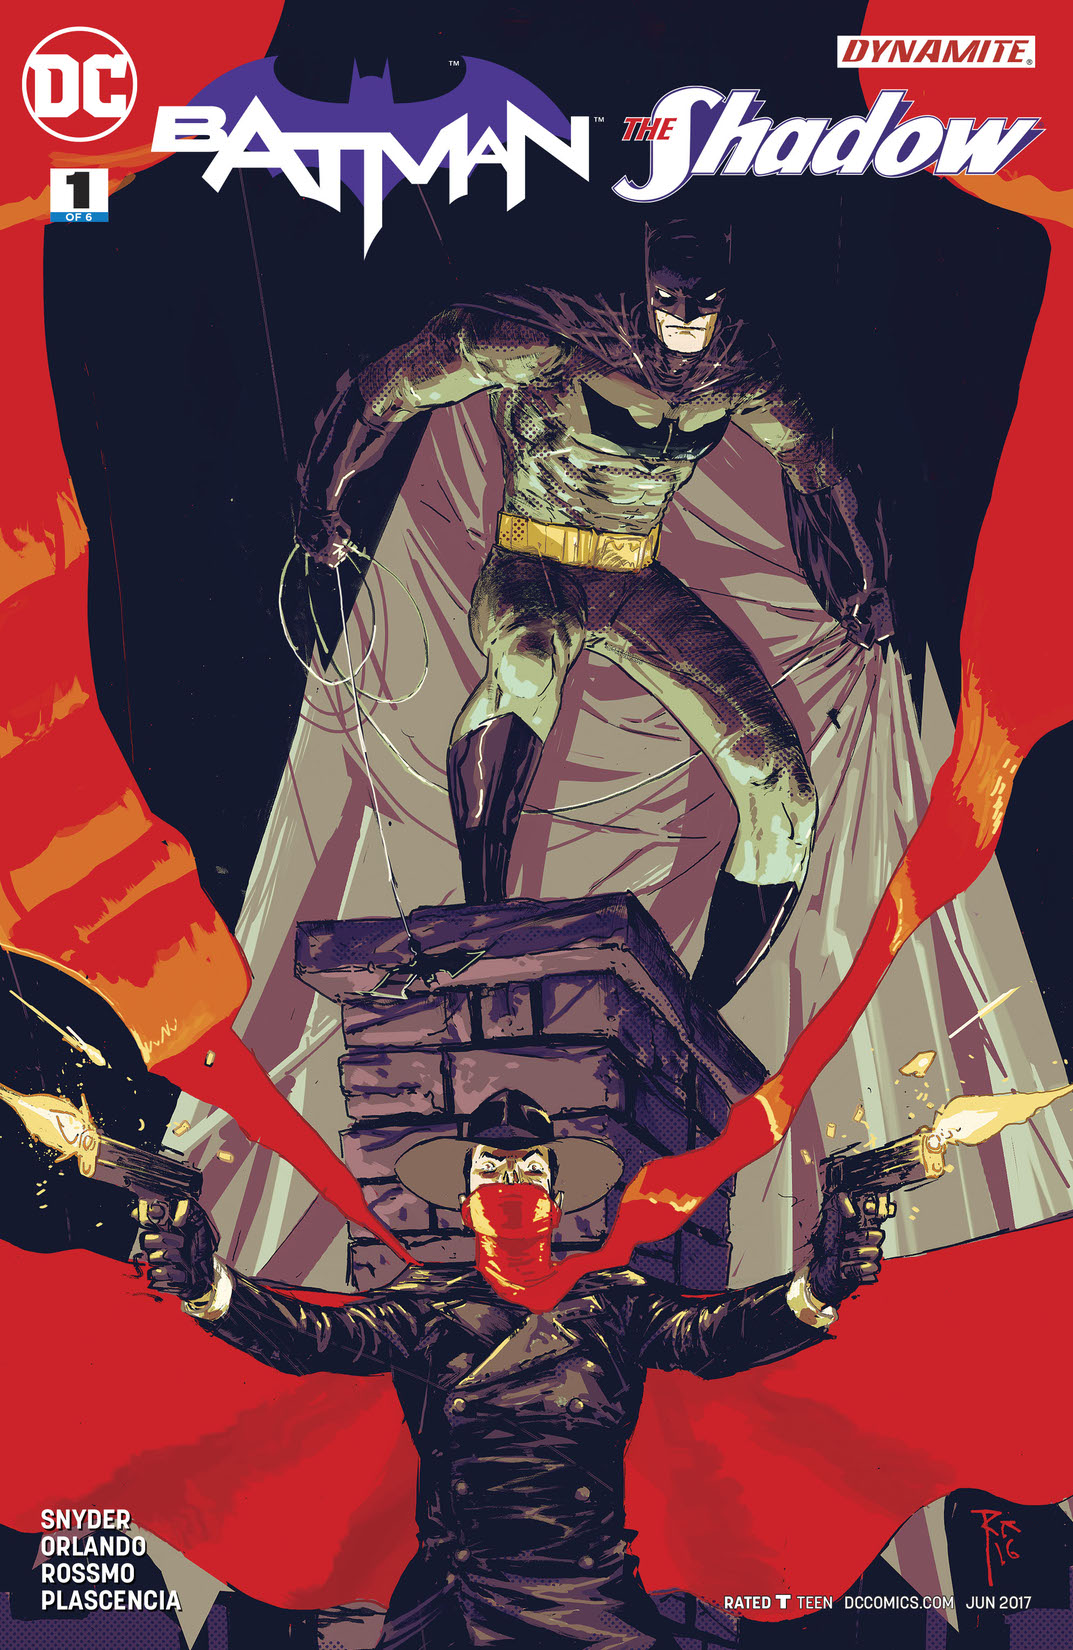 Batman/Shadow #1 preview images